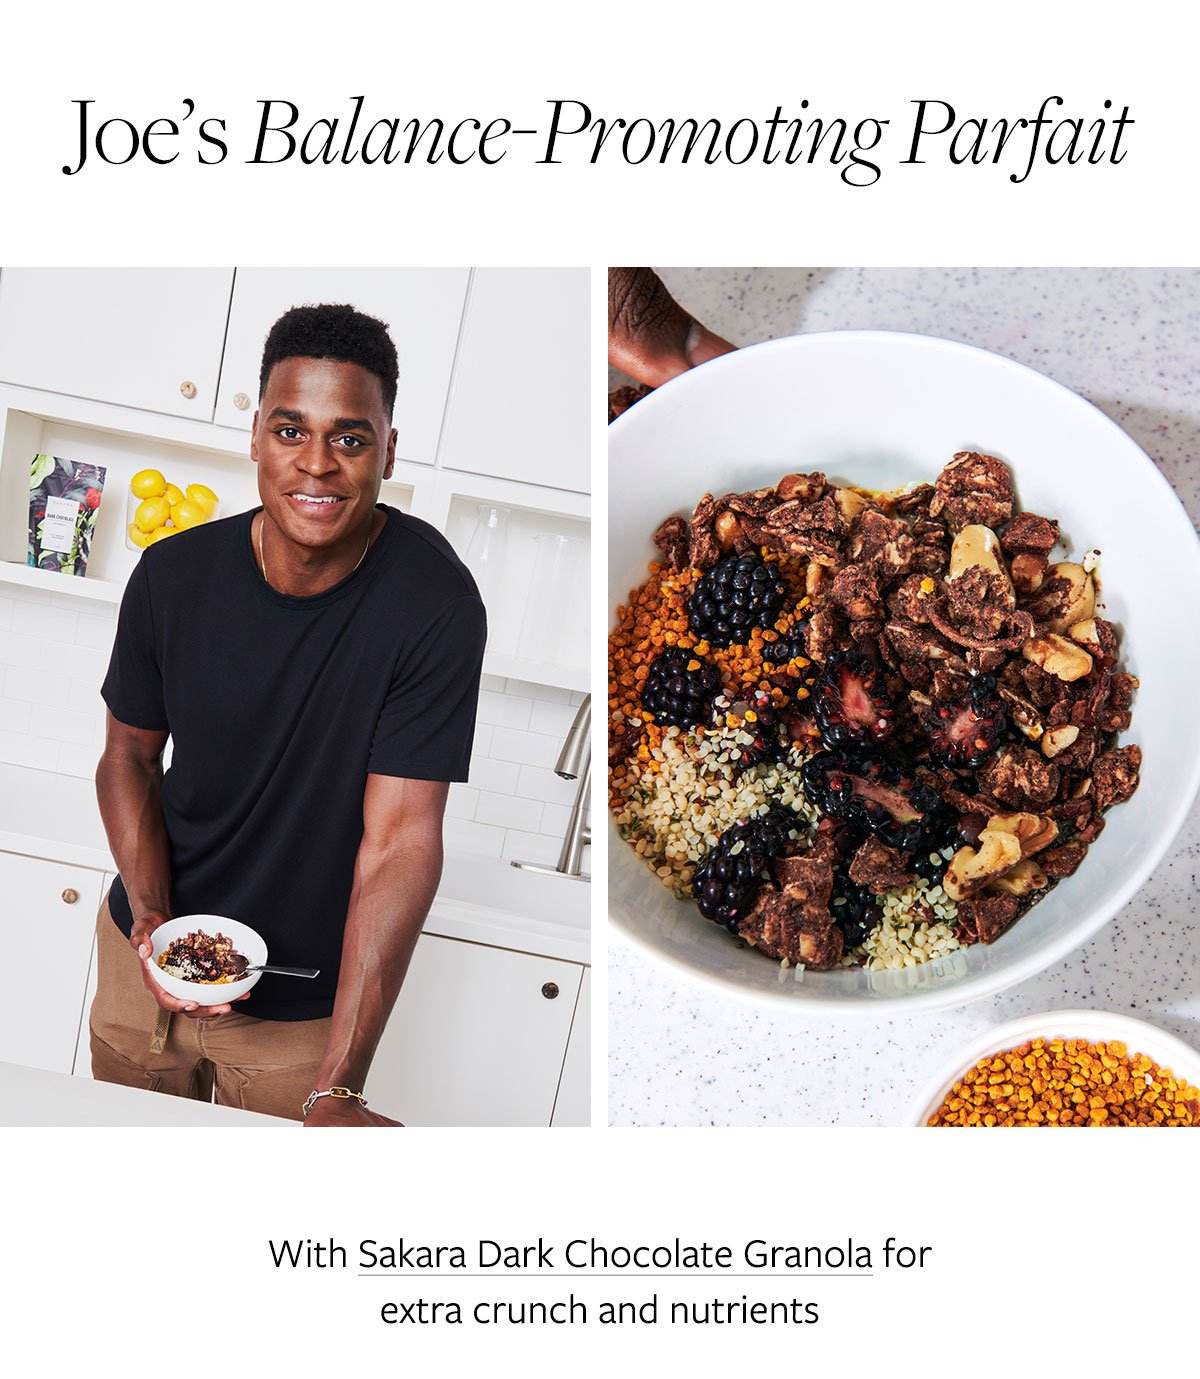 Joe's Balance-Promoting Parfait